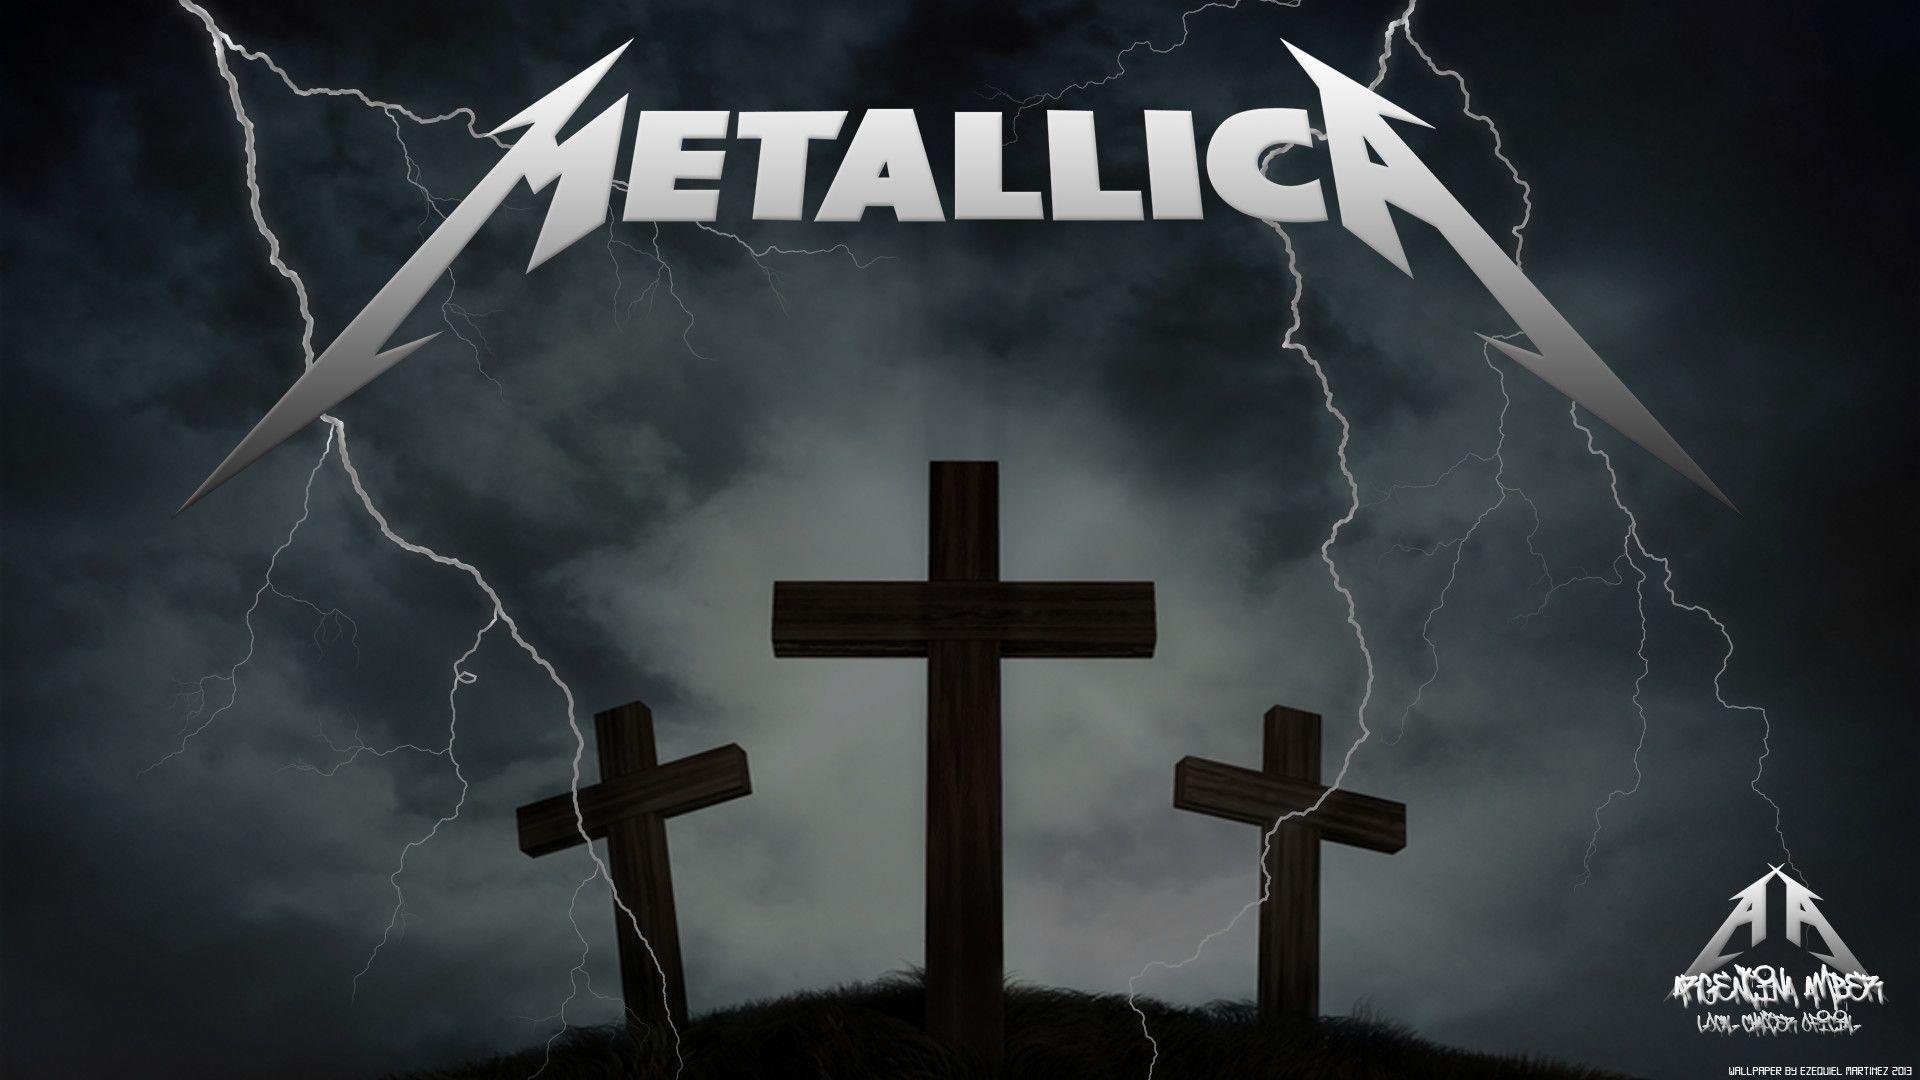 Metallica images.jpg